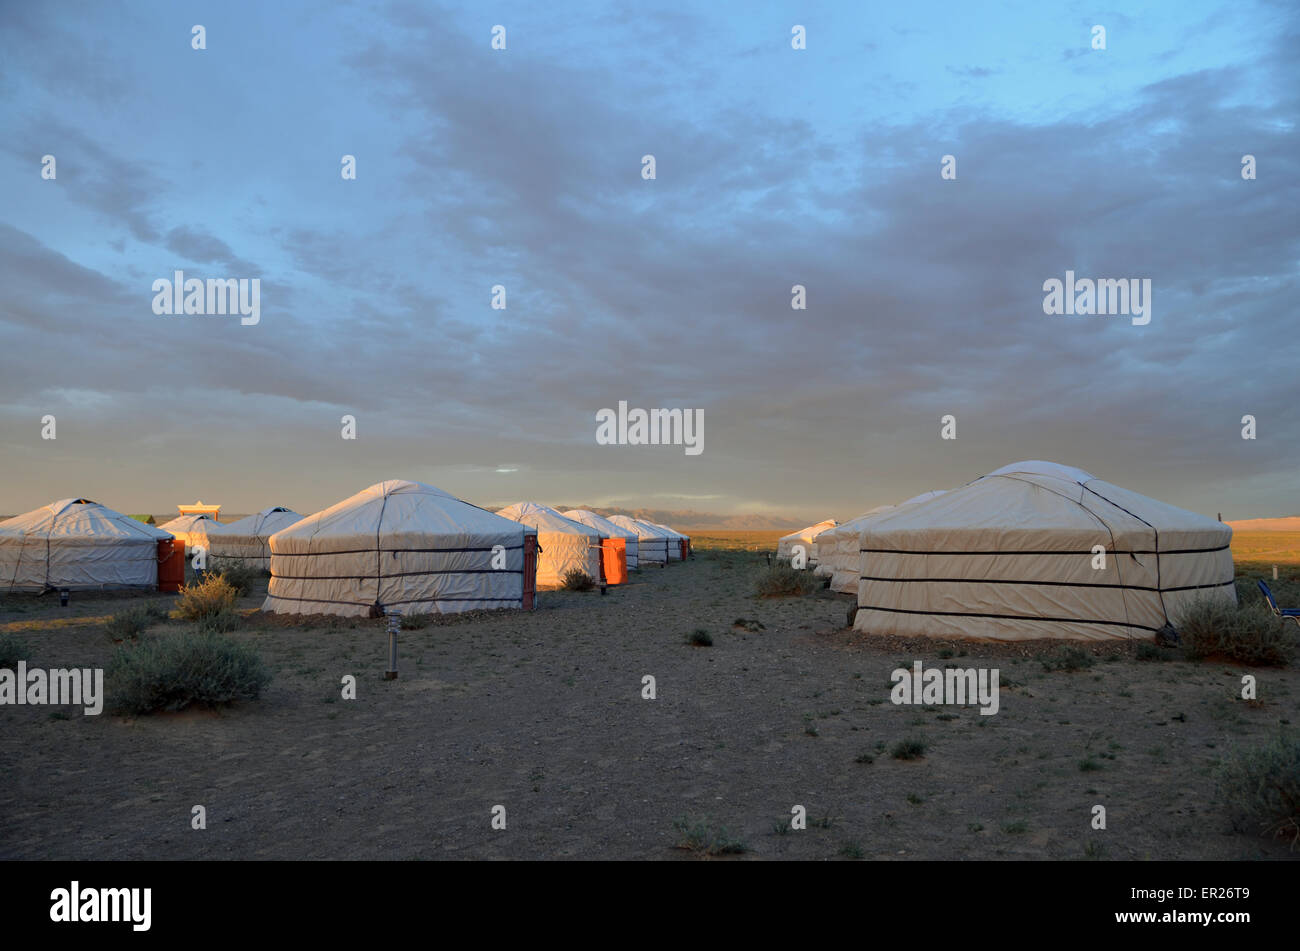 A yurt turist camp in the Gobi desert near the Khongoryn sand dunes, Omnogovi province, southern Mongolia. Stock Photo